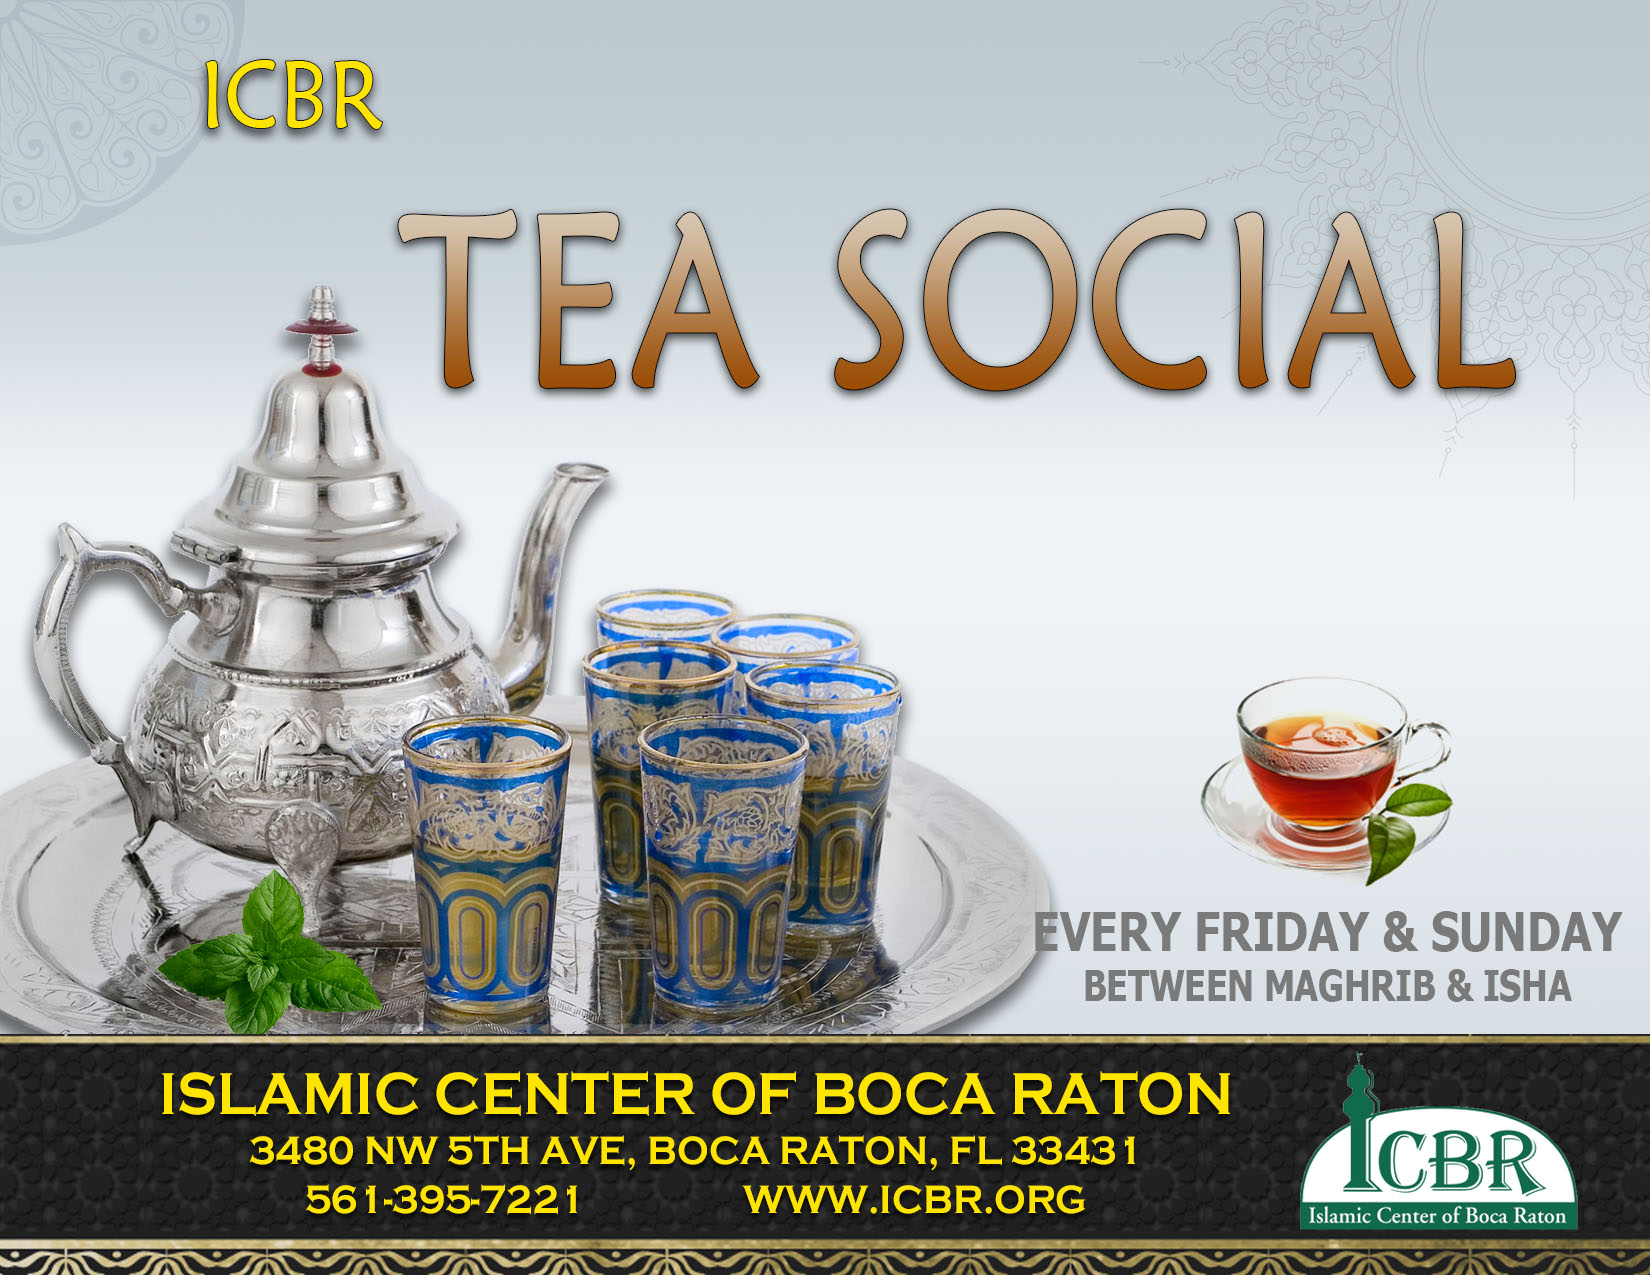 ICBR Tea Social